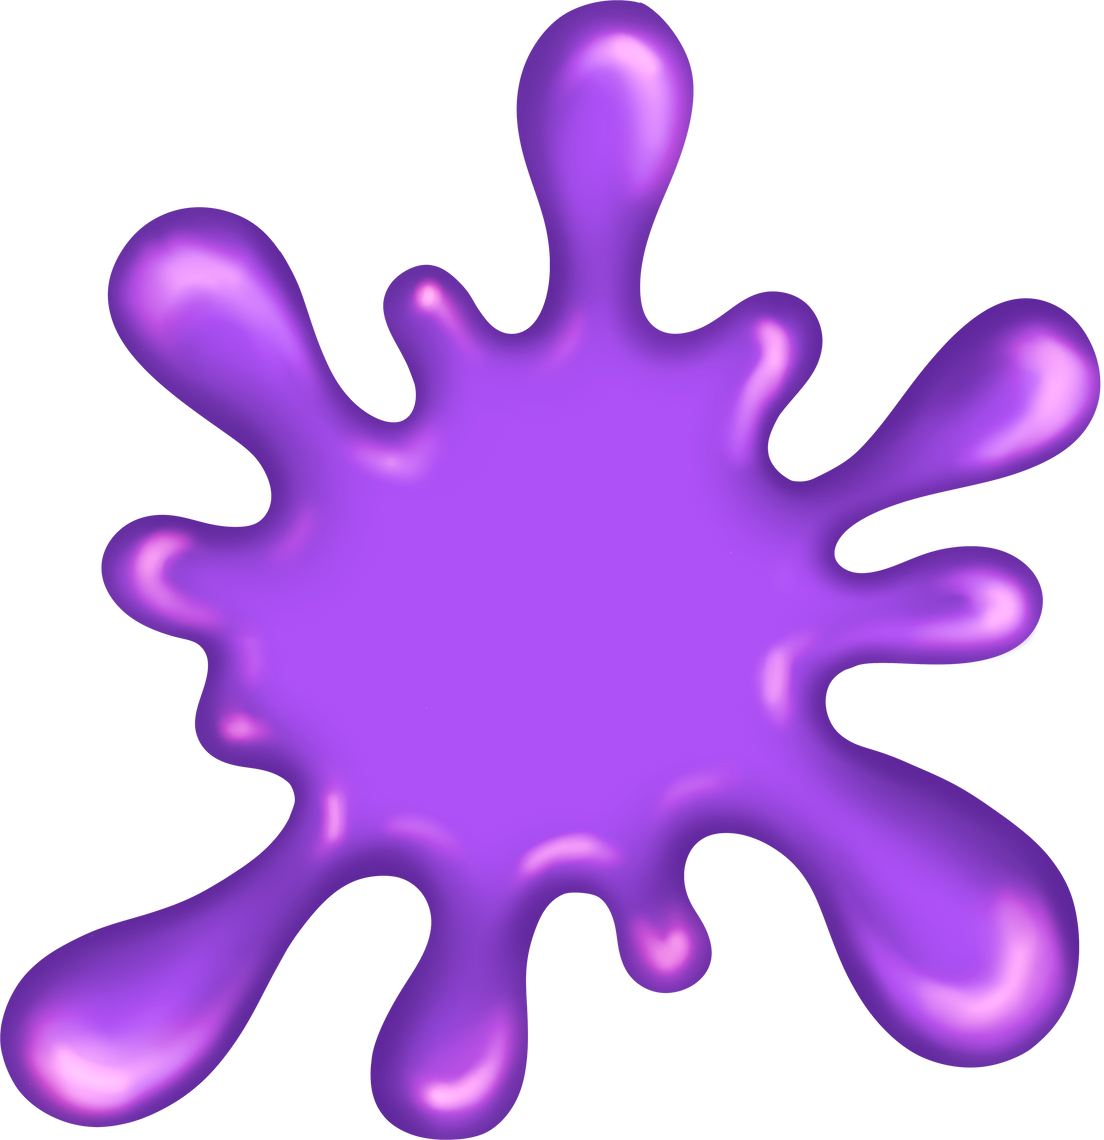 Purple paint splatter